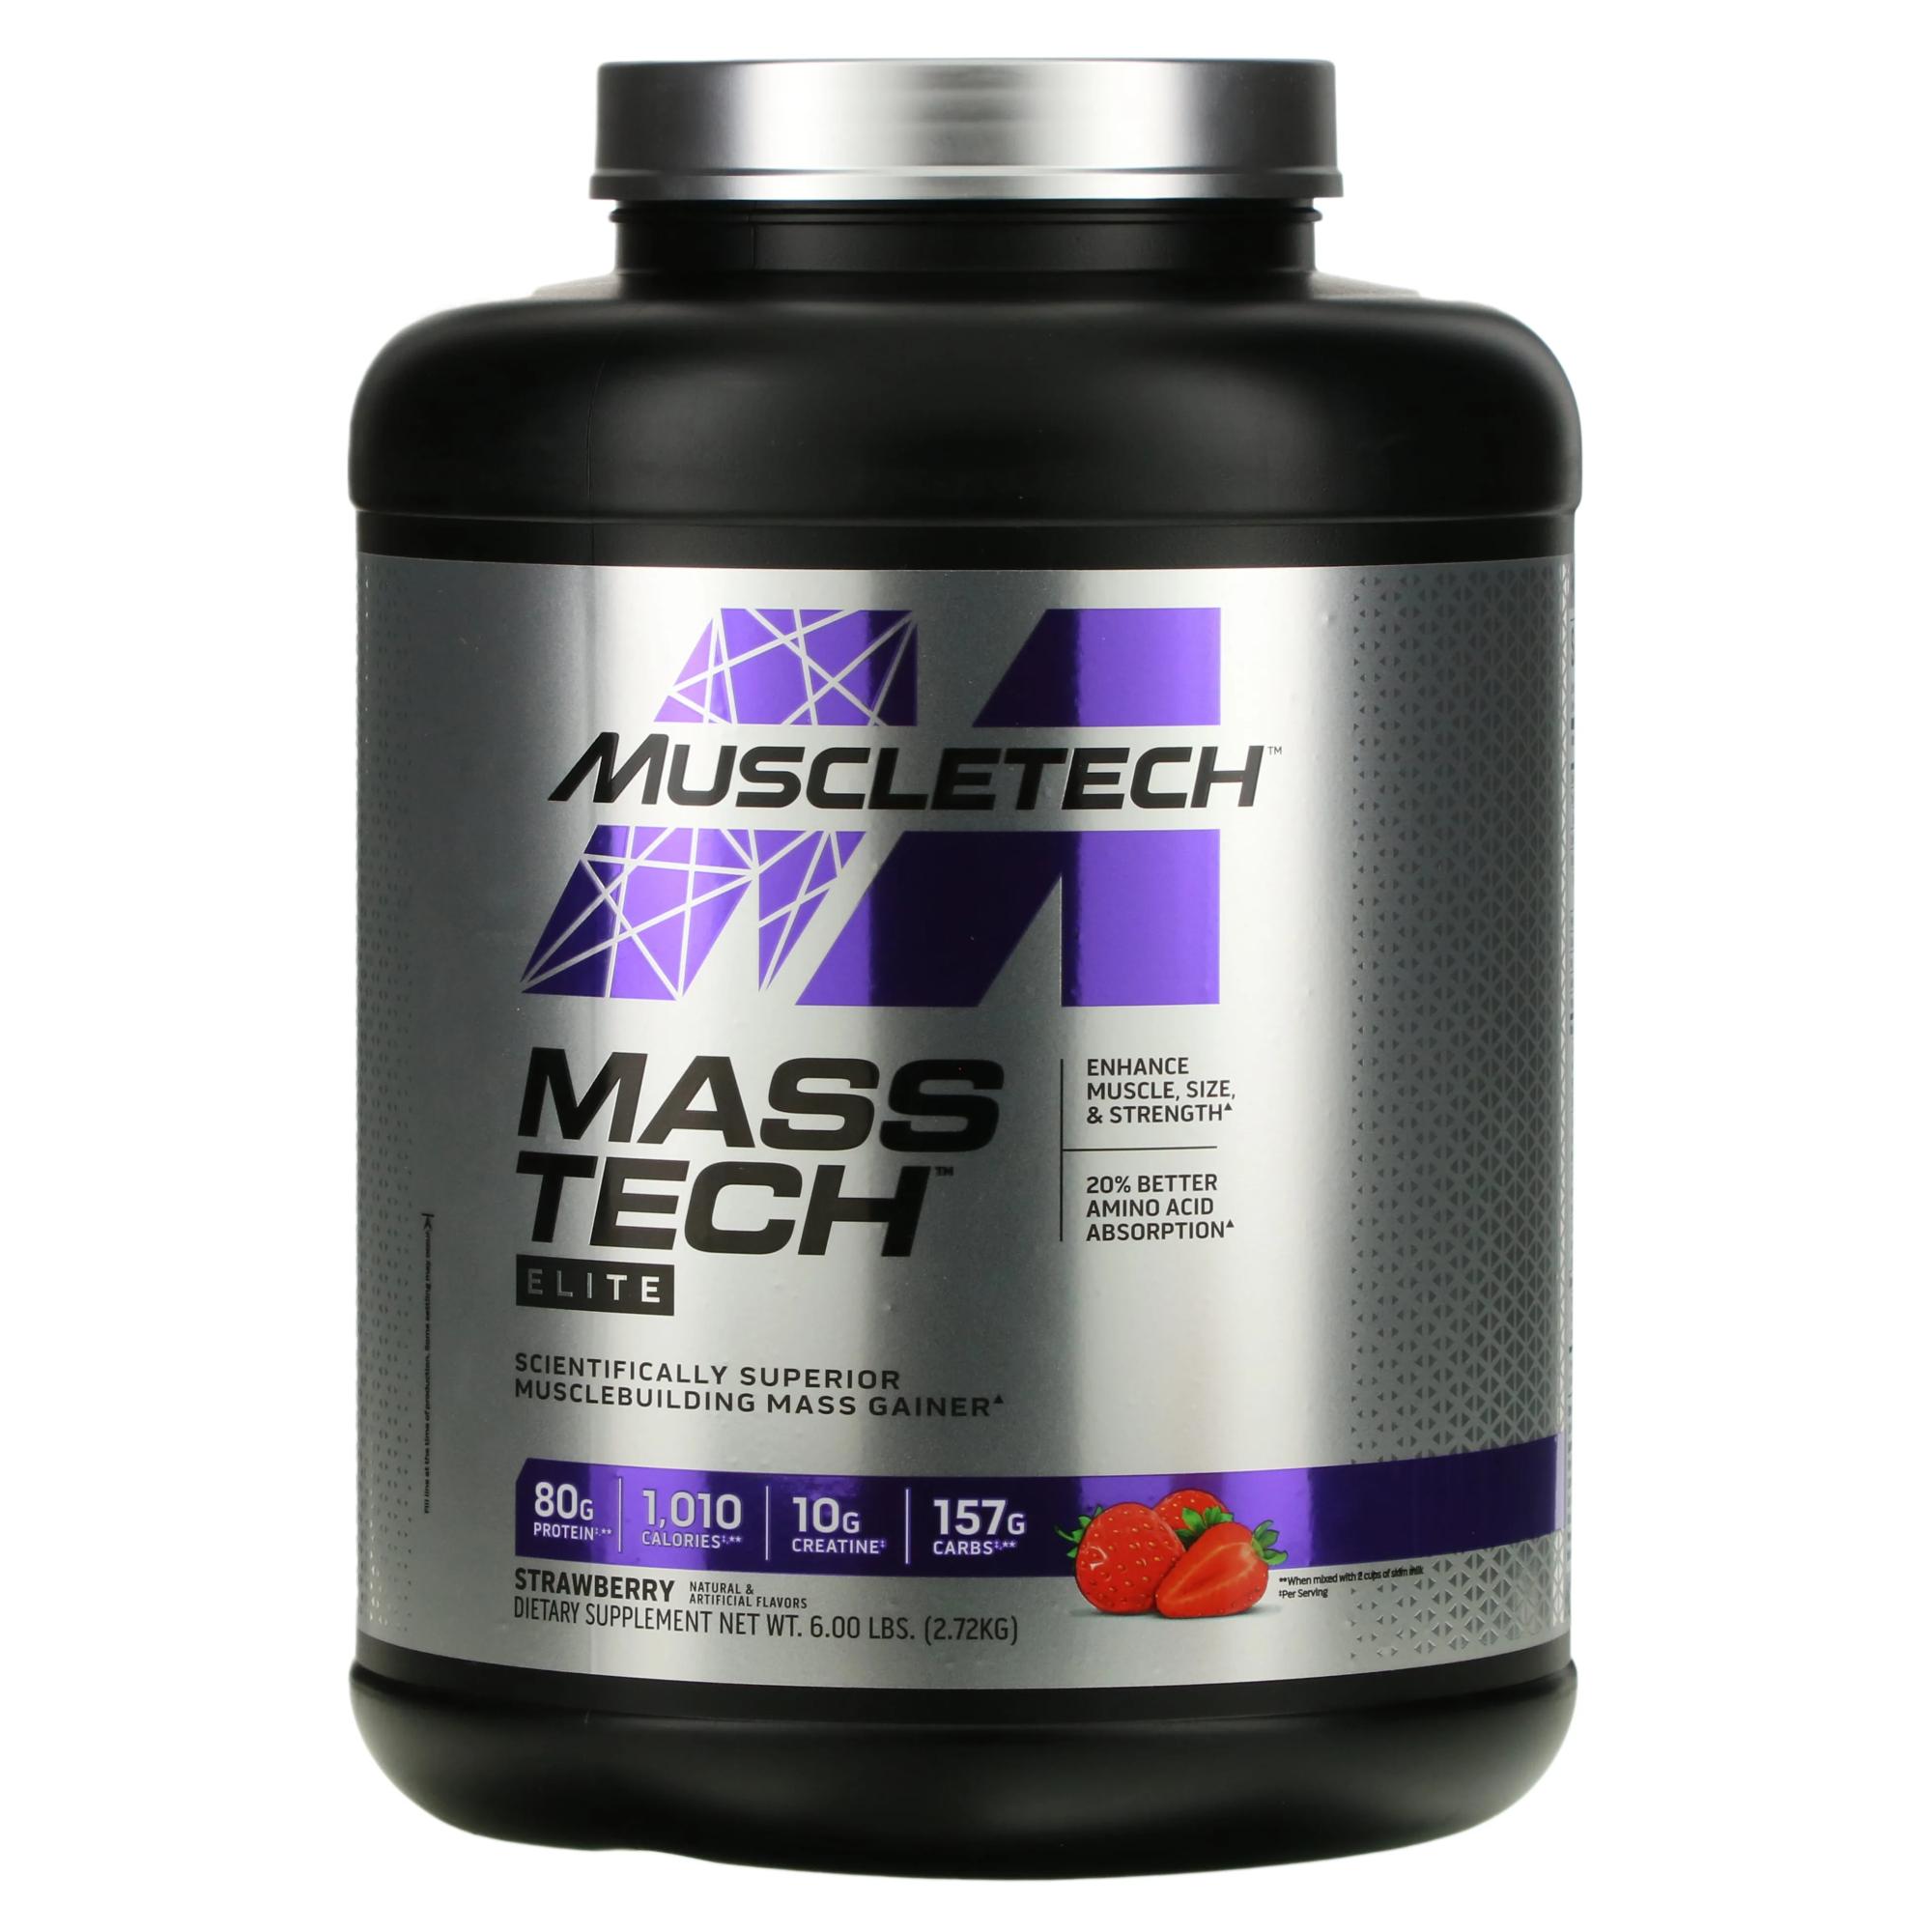 MuscleTech Mass Tech Elite клубника 2,72 кг (6 фунтов) muscletech mass tech elite печенье и сливки 2 72 кг 6 фунтов